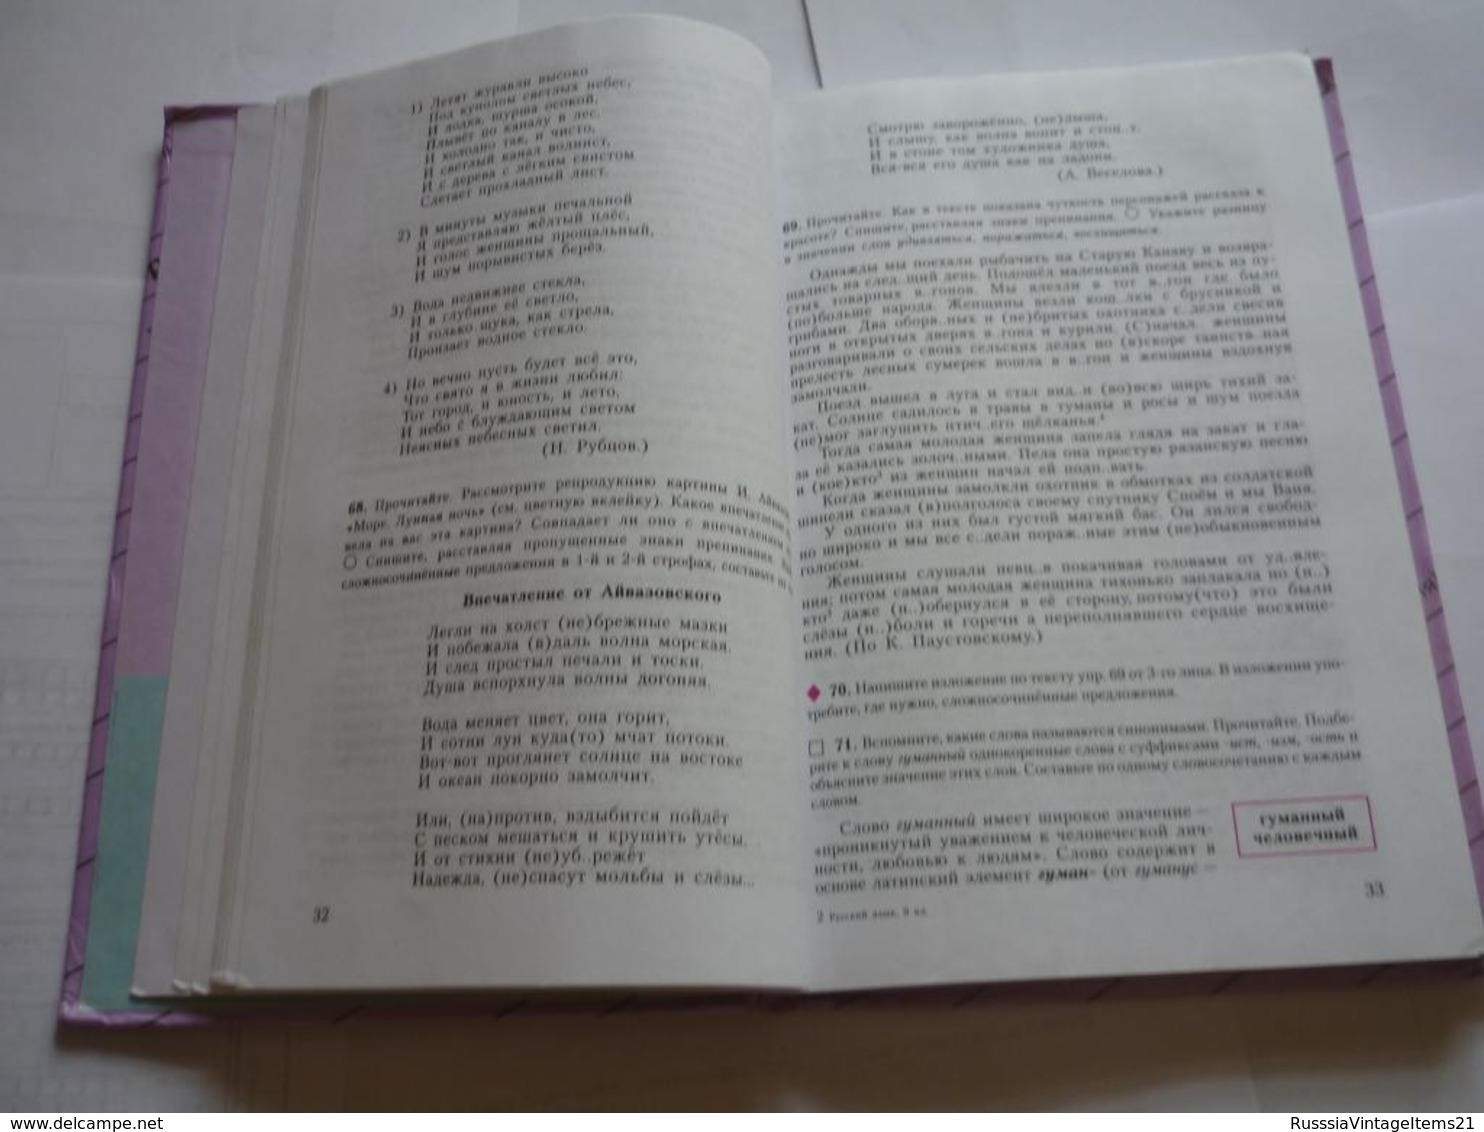 Russian Textbook - In Russian - Barkhudarov S. Kryuchkov S .; Maksimov L. - Russian Language - Textbook For Grade 9. - Langues Slaves